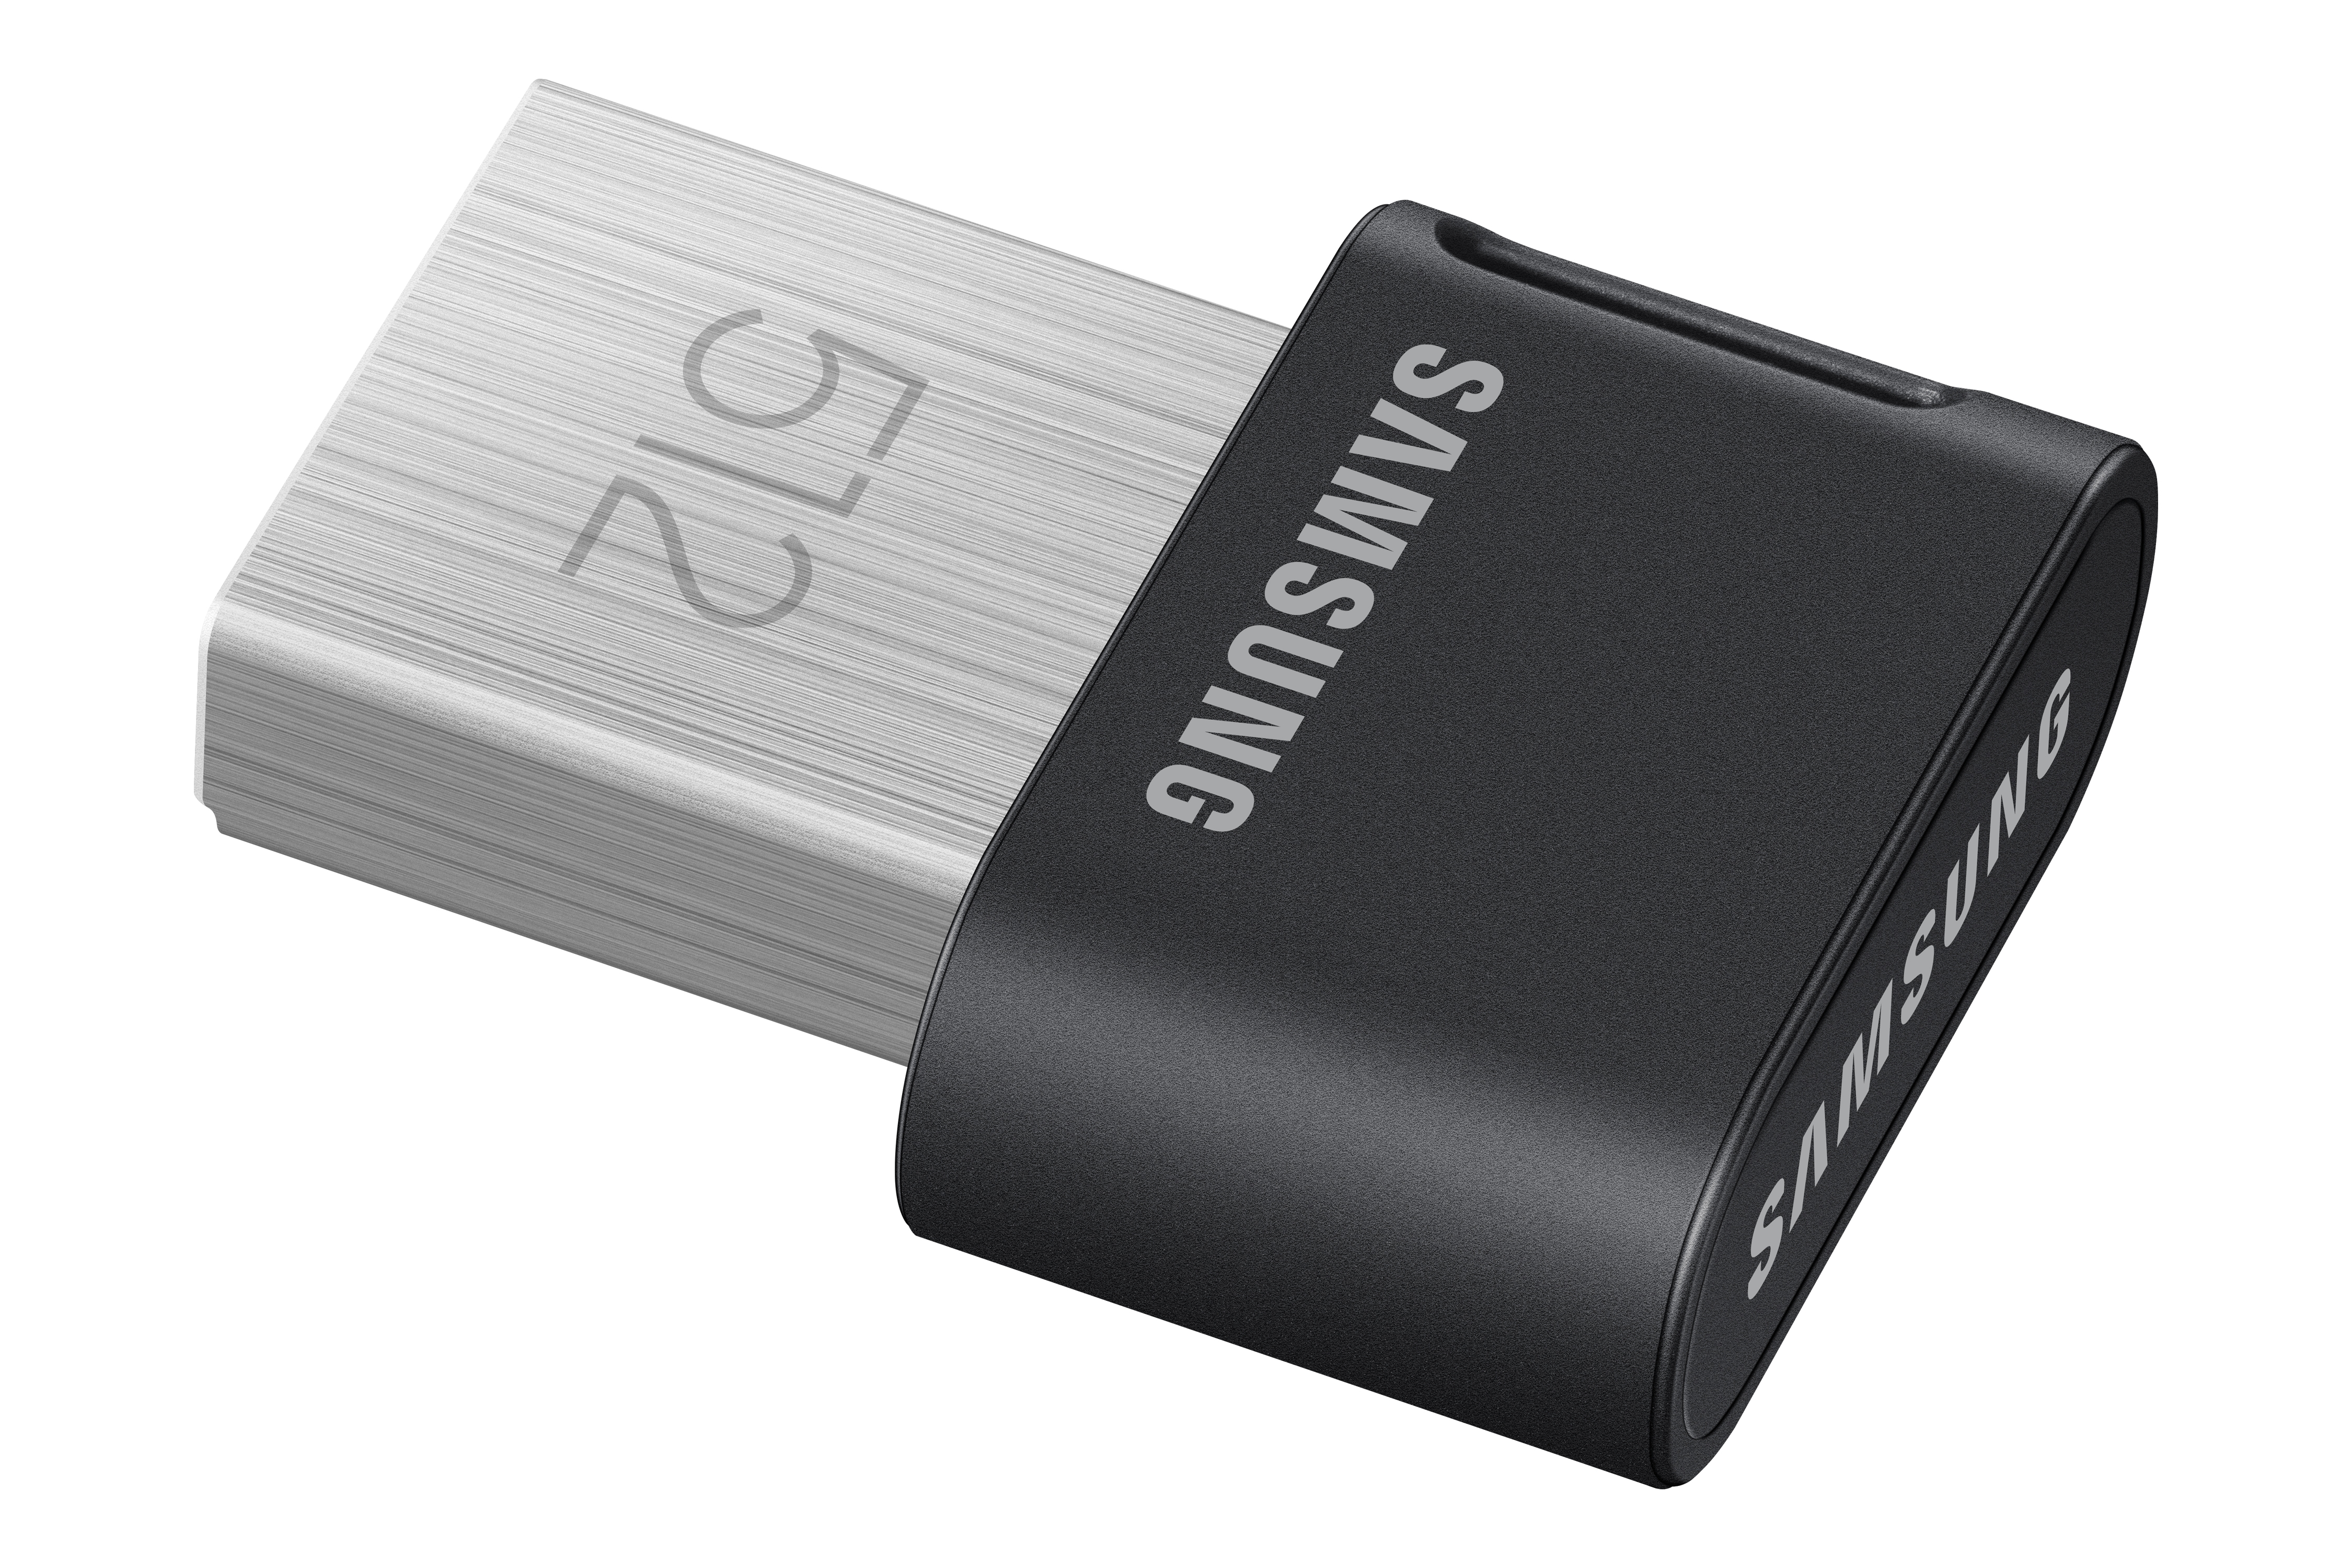 SamsungUS/home/computing/memory-storage/usb-flash-drives/05022024/MUF-512AB-AM_005_Dynamic_Titan_Gray.jpg